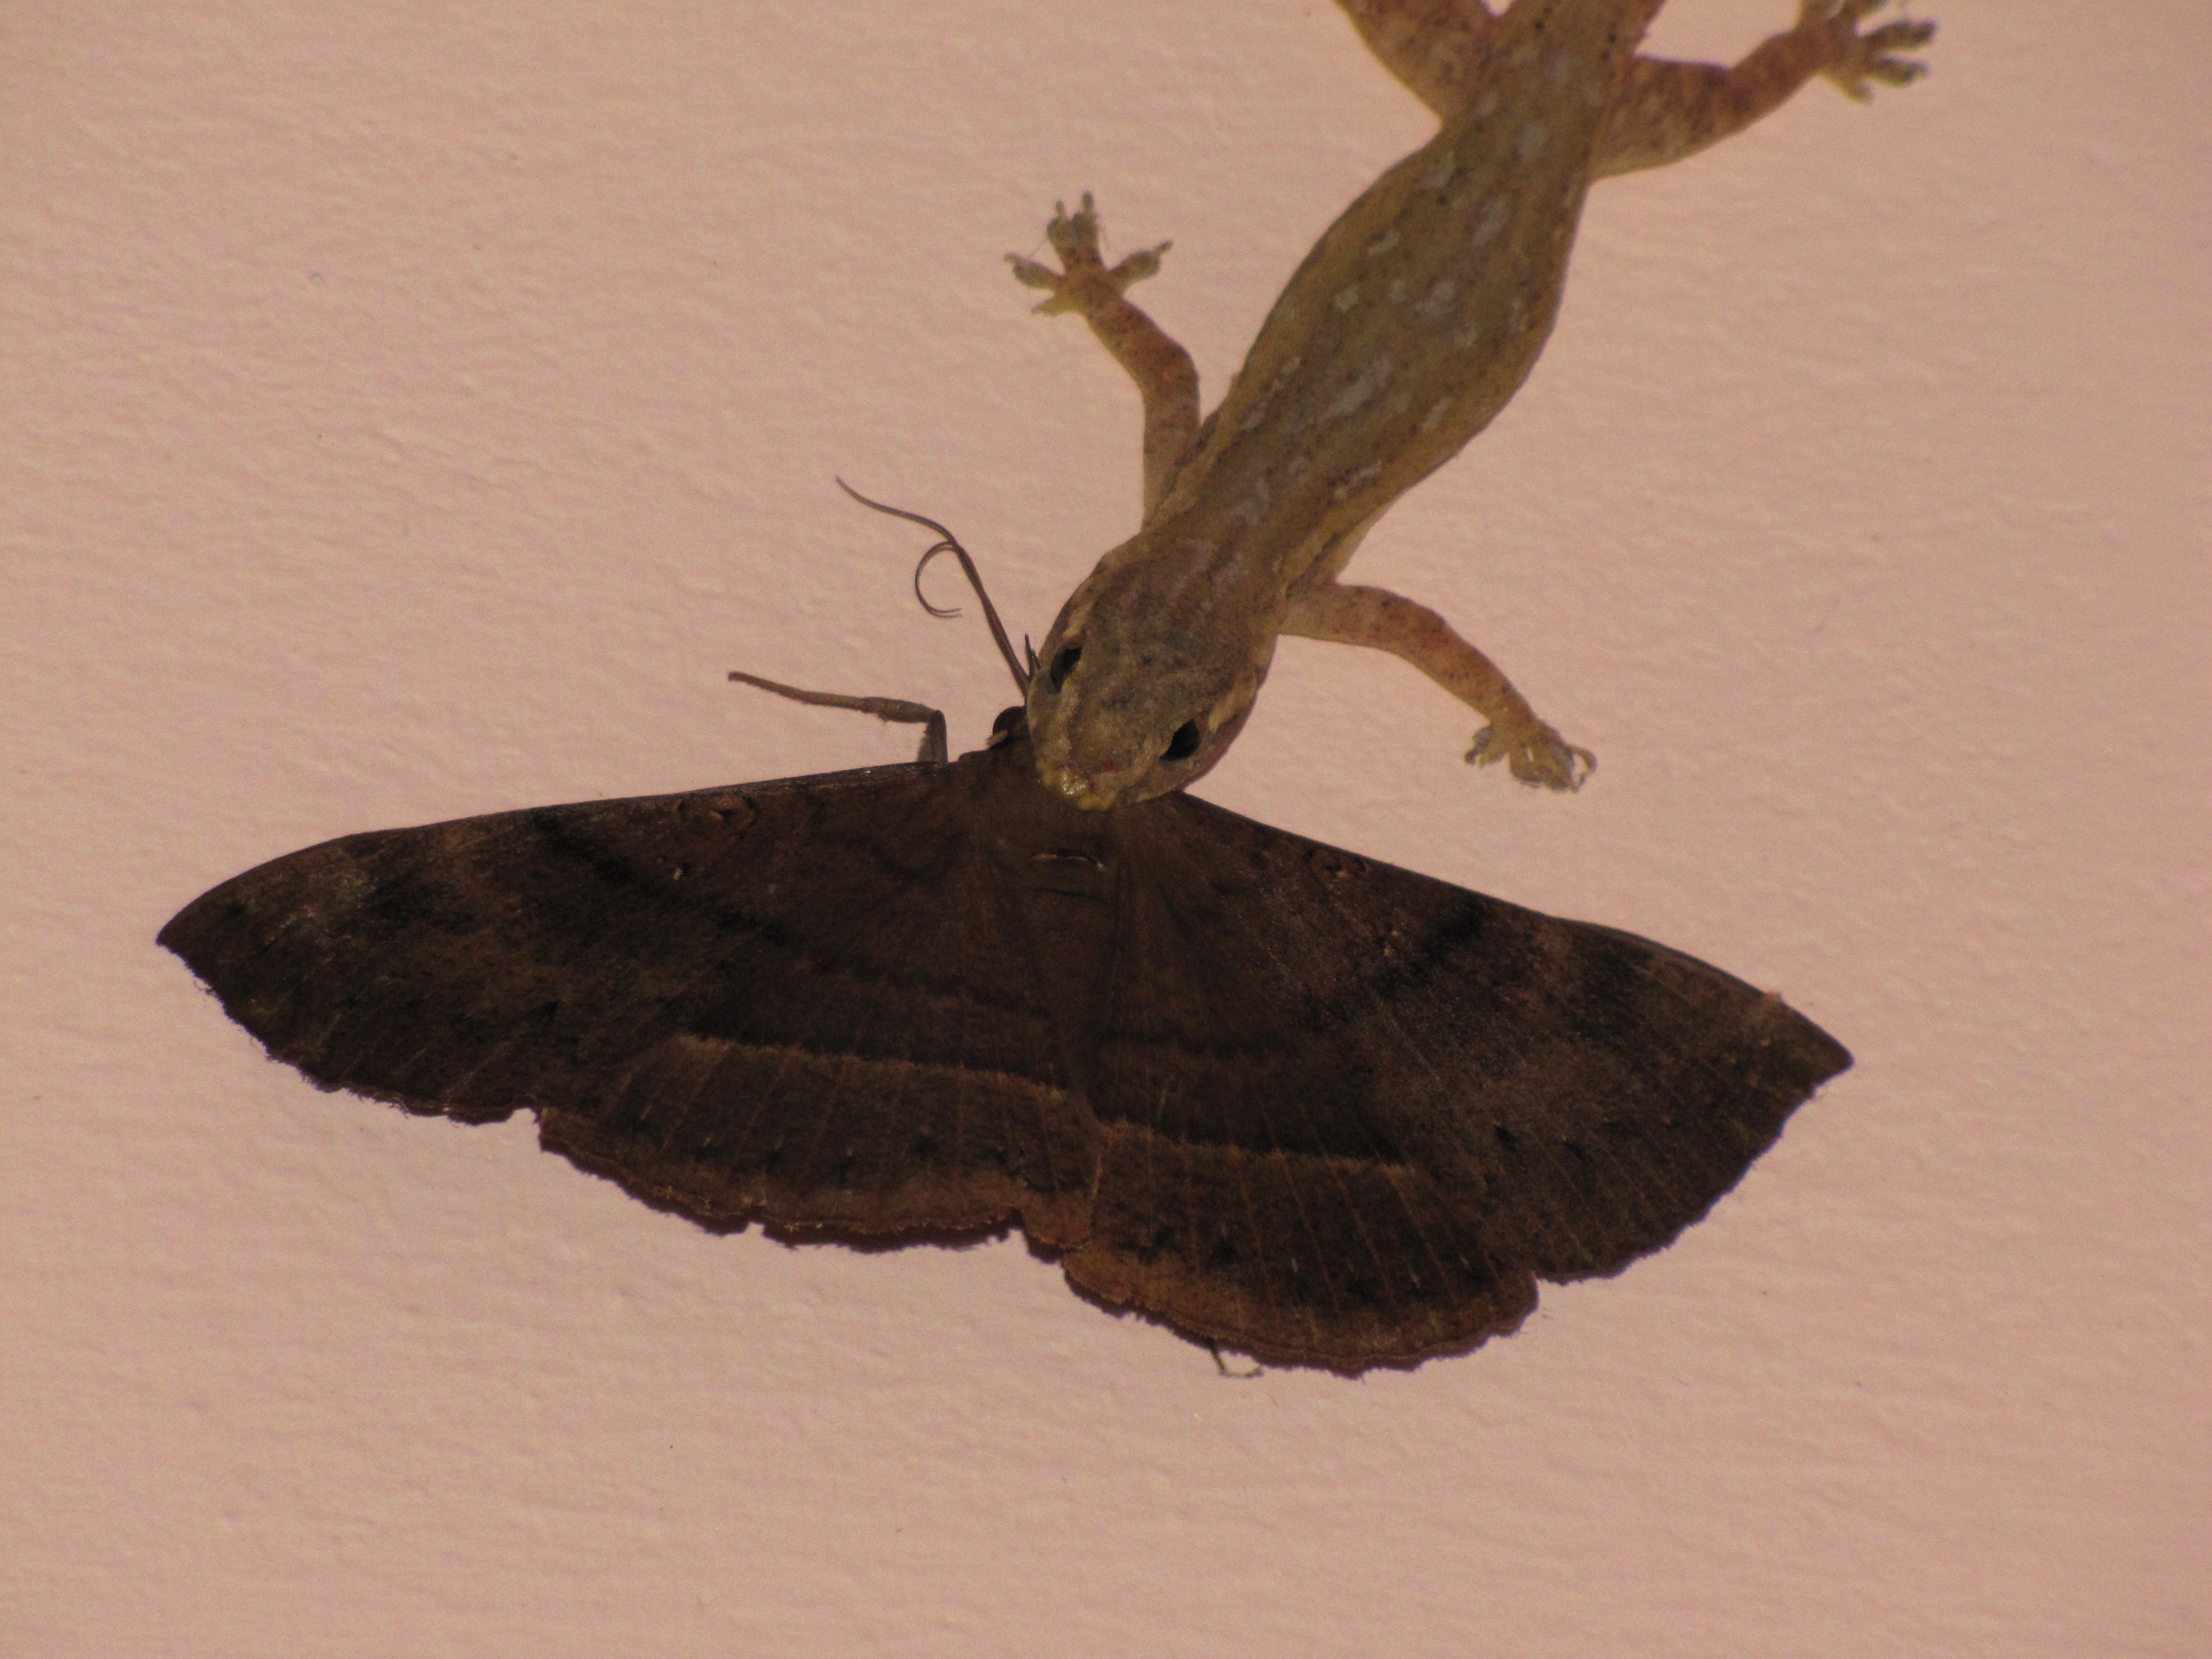 File:Lizard catching the moth.jpg - Wikimedia Commons